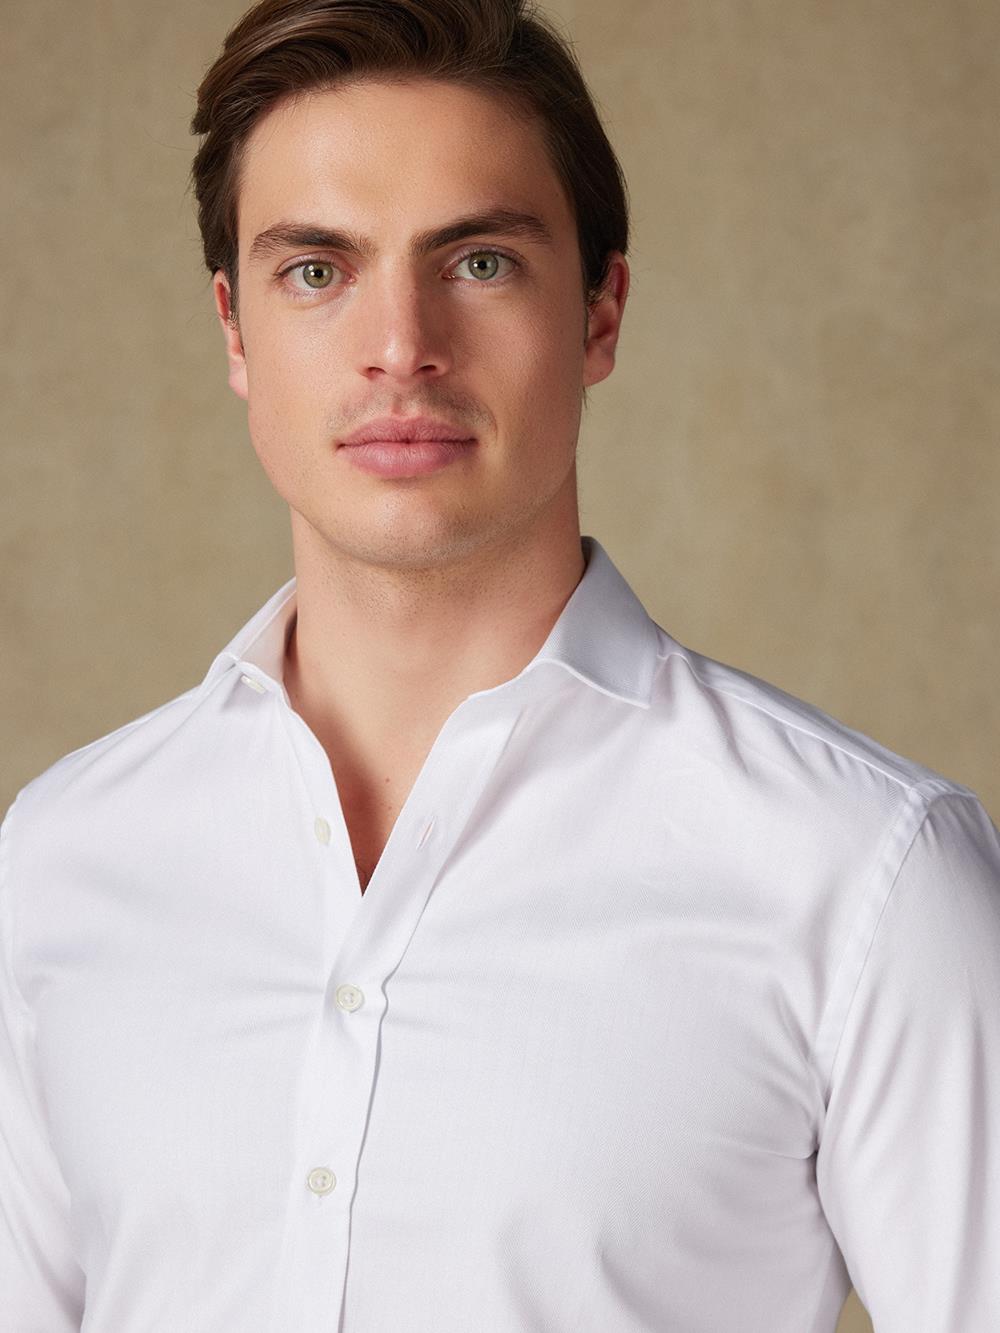 Wit visgraat overhemd